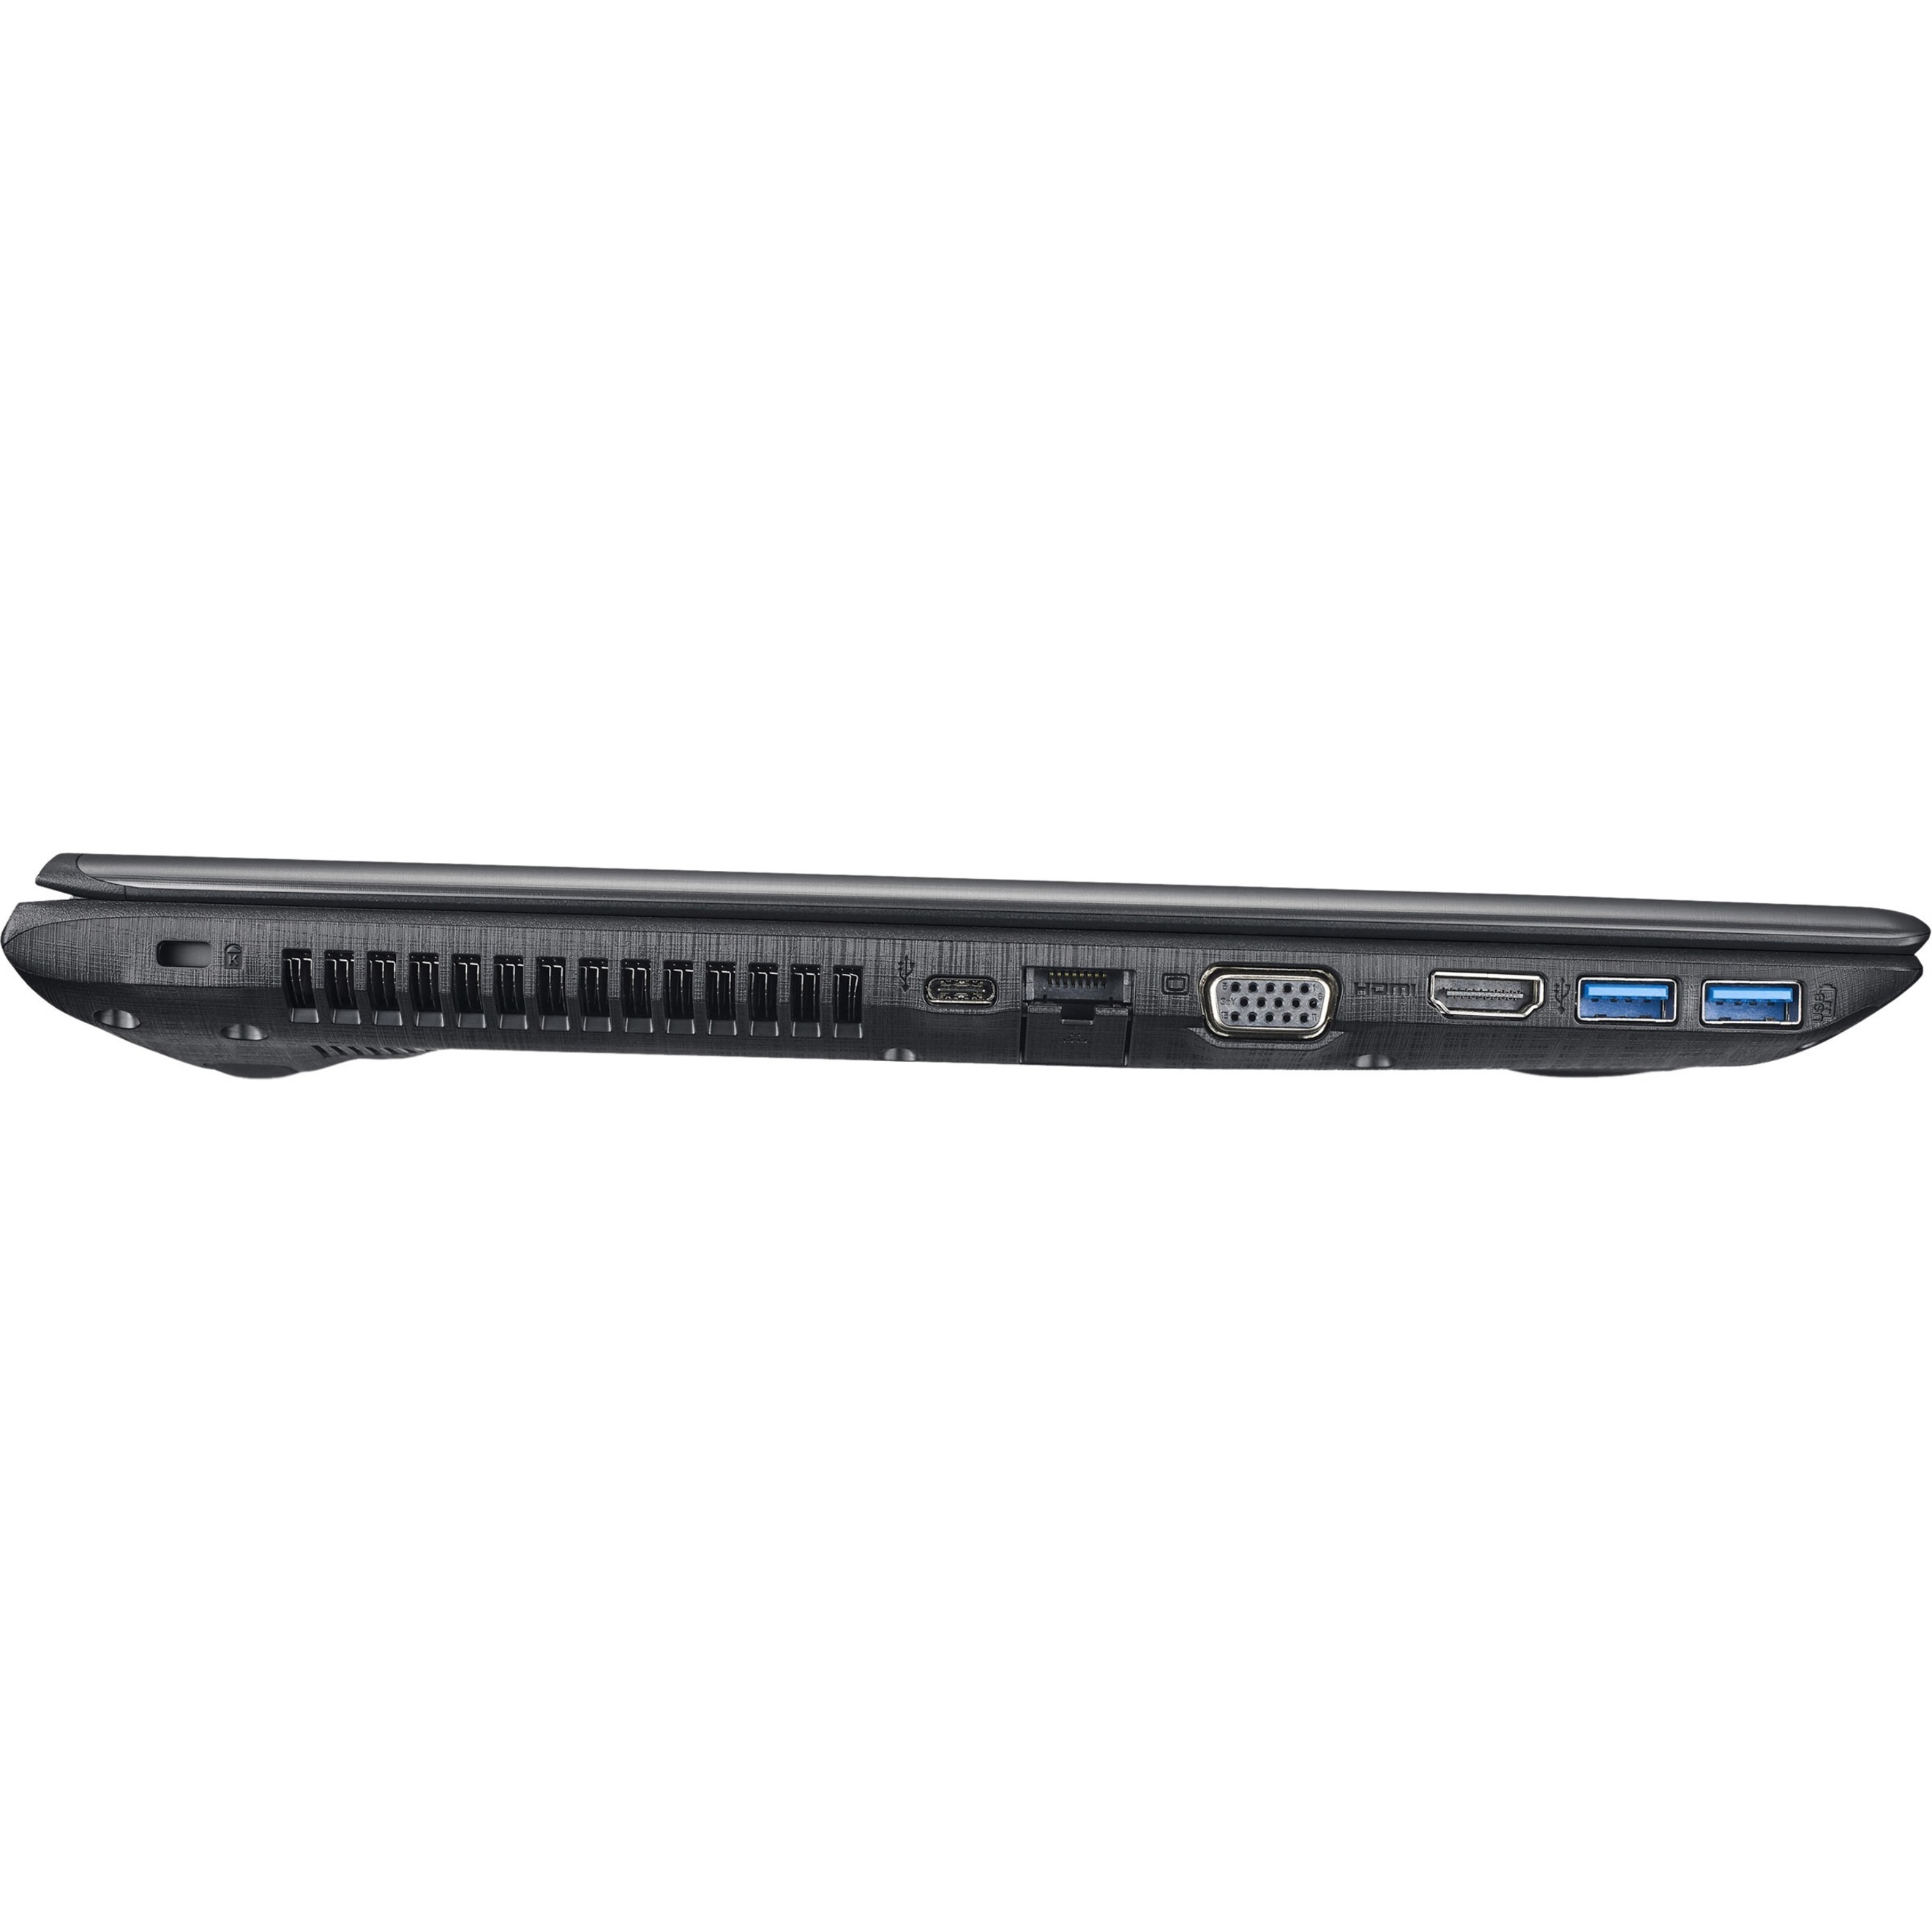 Acer Aspire 15.6" Full HD Laptop, Intel Core i5 i5-7200U, 256GB SSD, DVD Writer, Windows 10 Home, E5-575G-57D4 - image 4 of 6